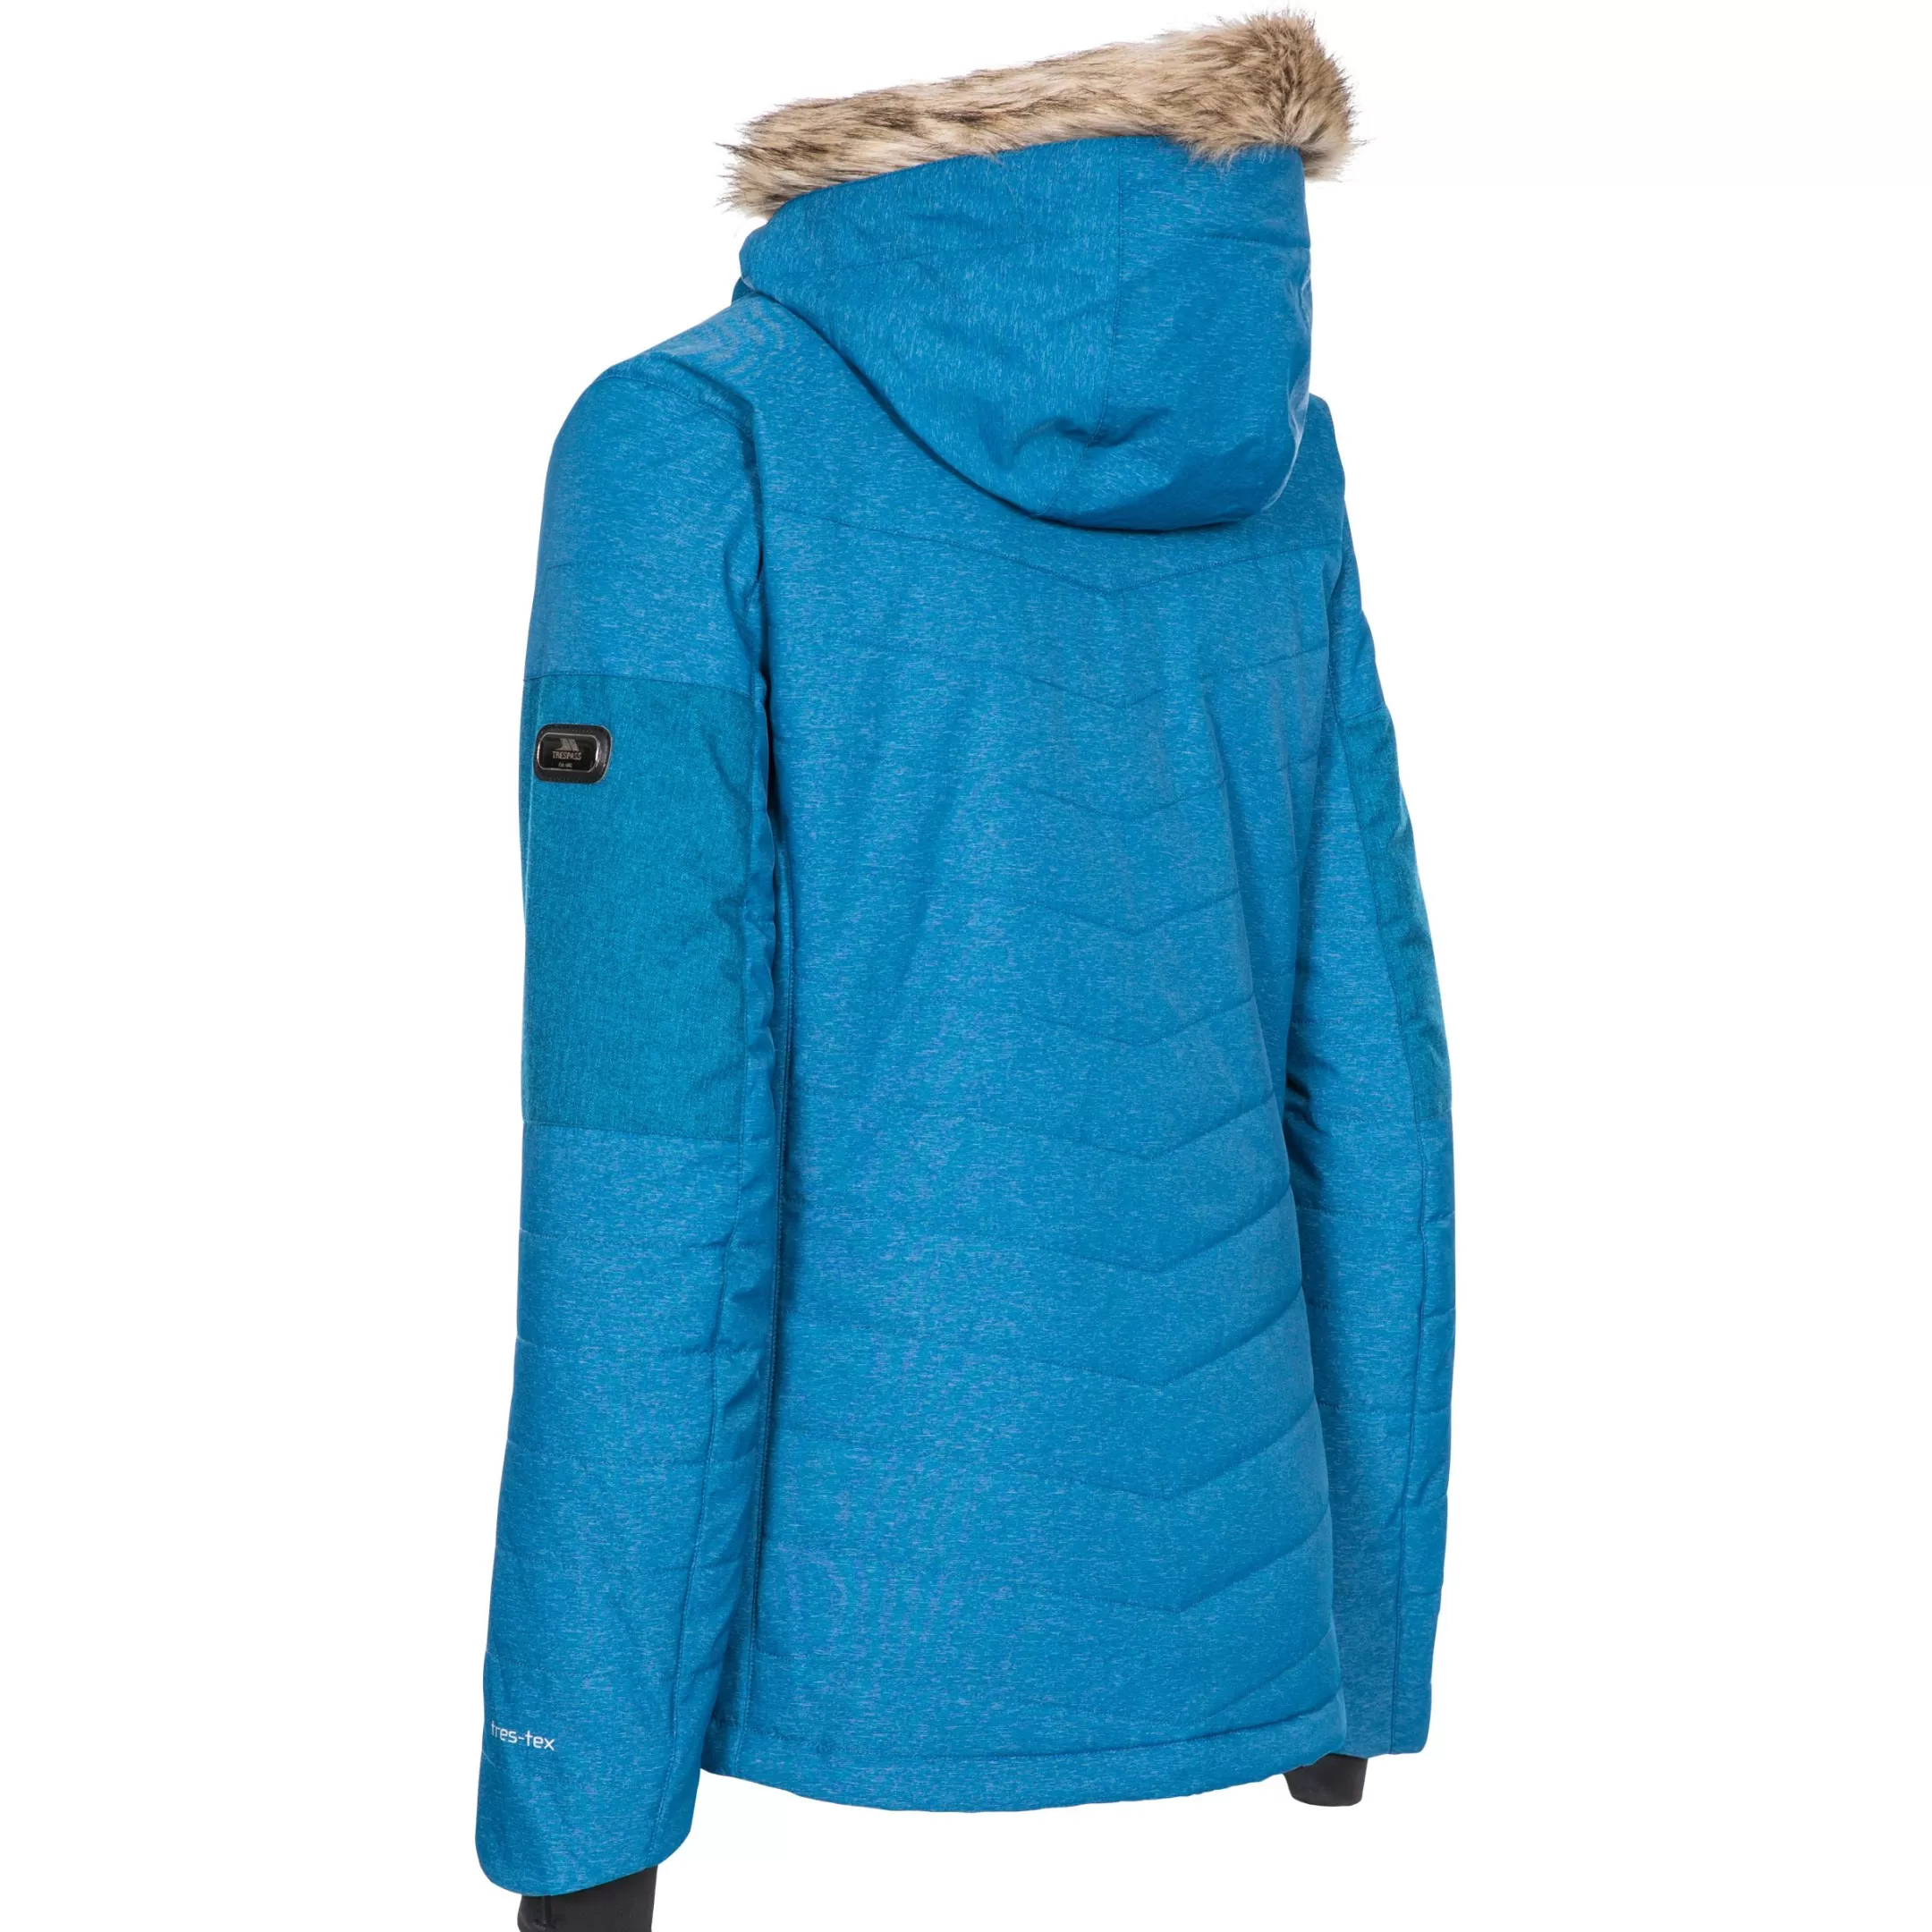 Womens Ski Jacket Tiffany | Trespass Outlet